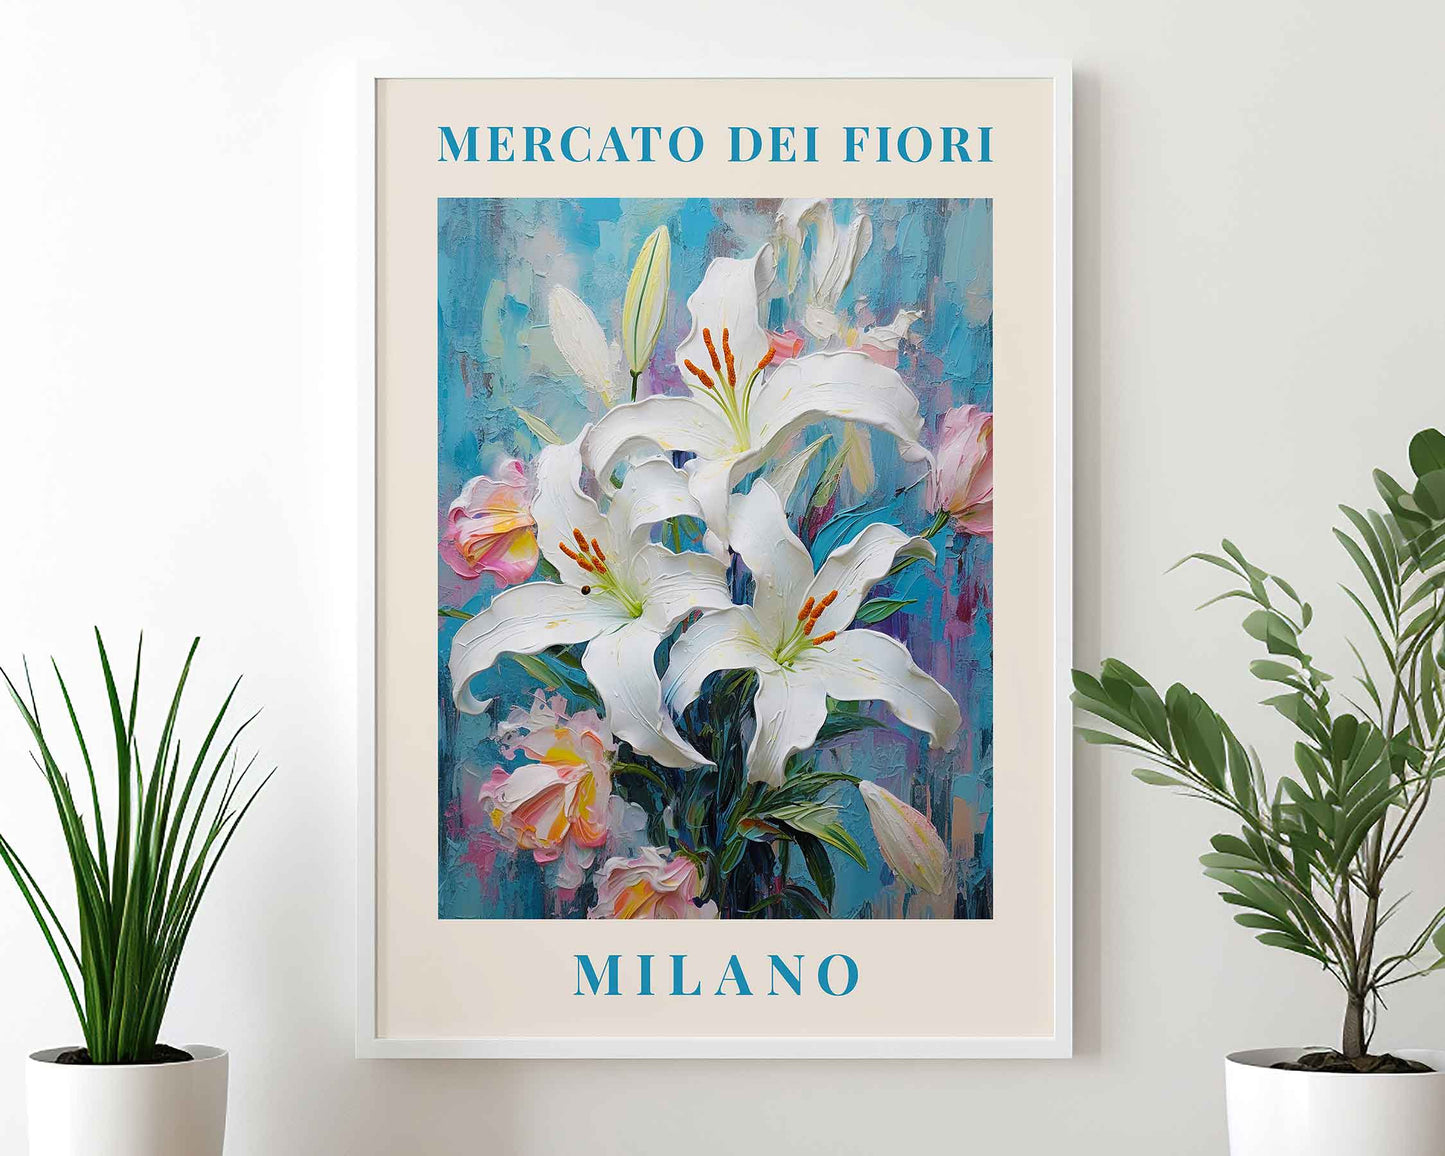 Framed Image of Milan Flower Market Prints Botanical Boho Vintage Painting Wall Art Posters